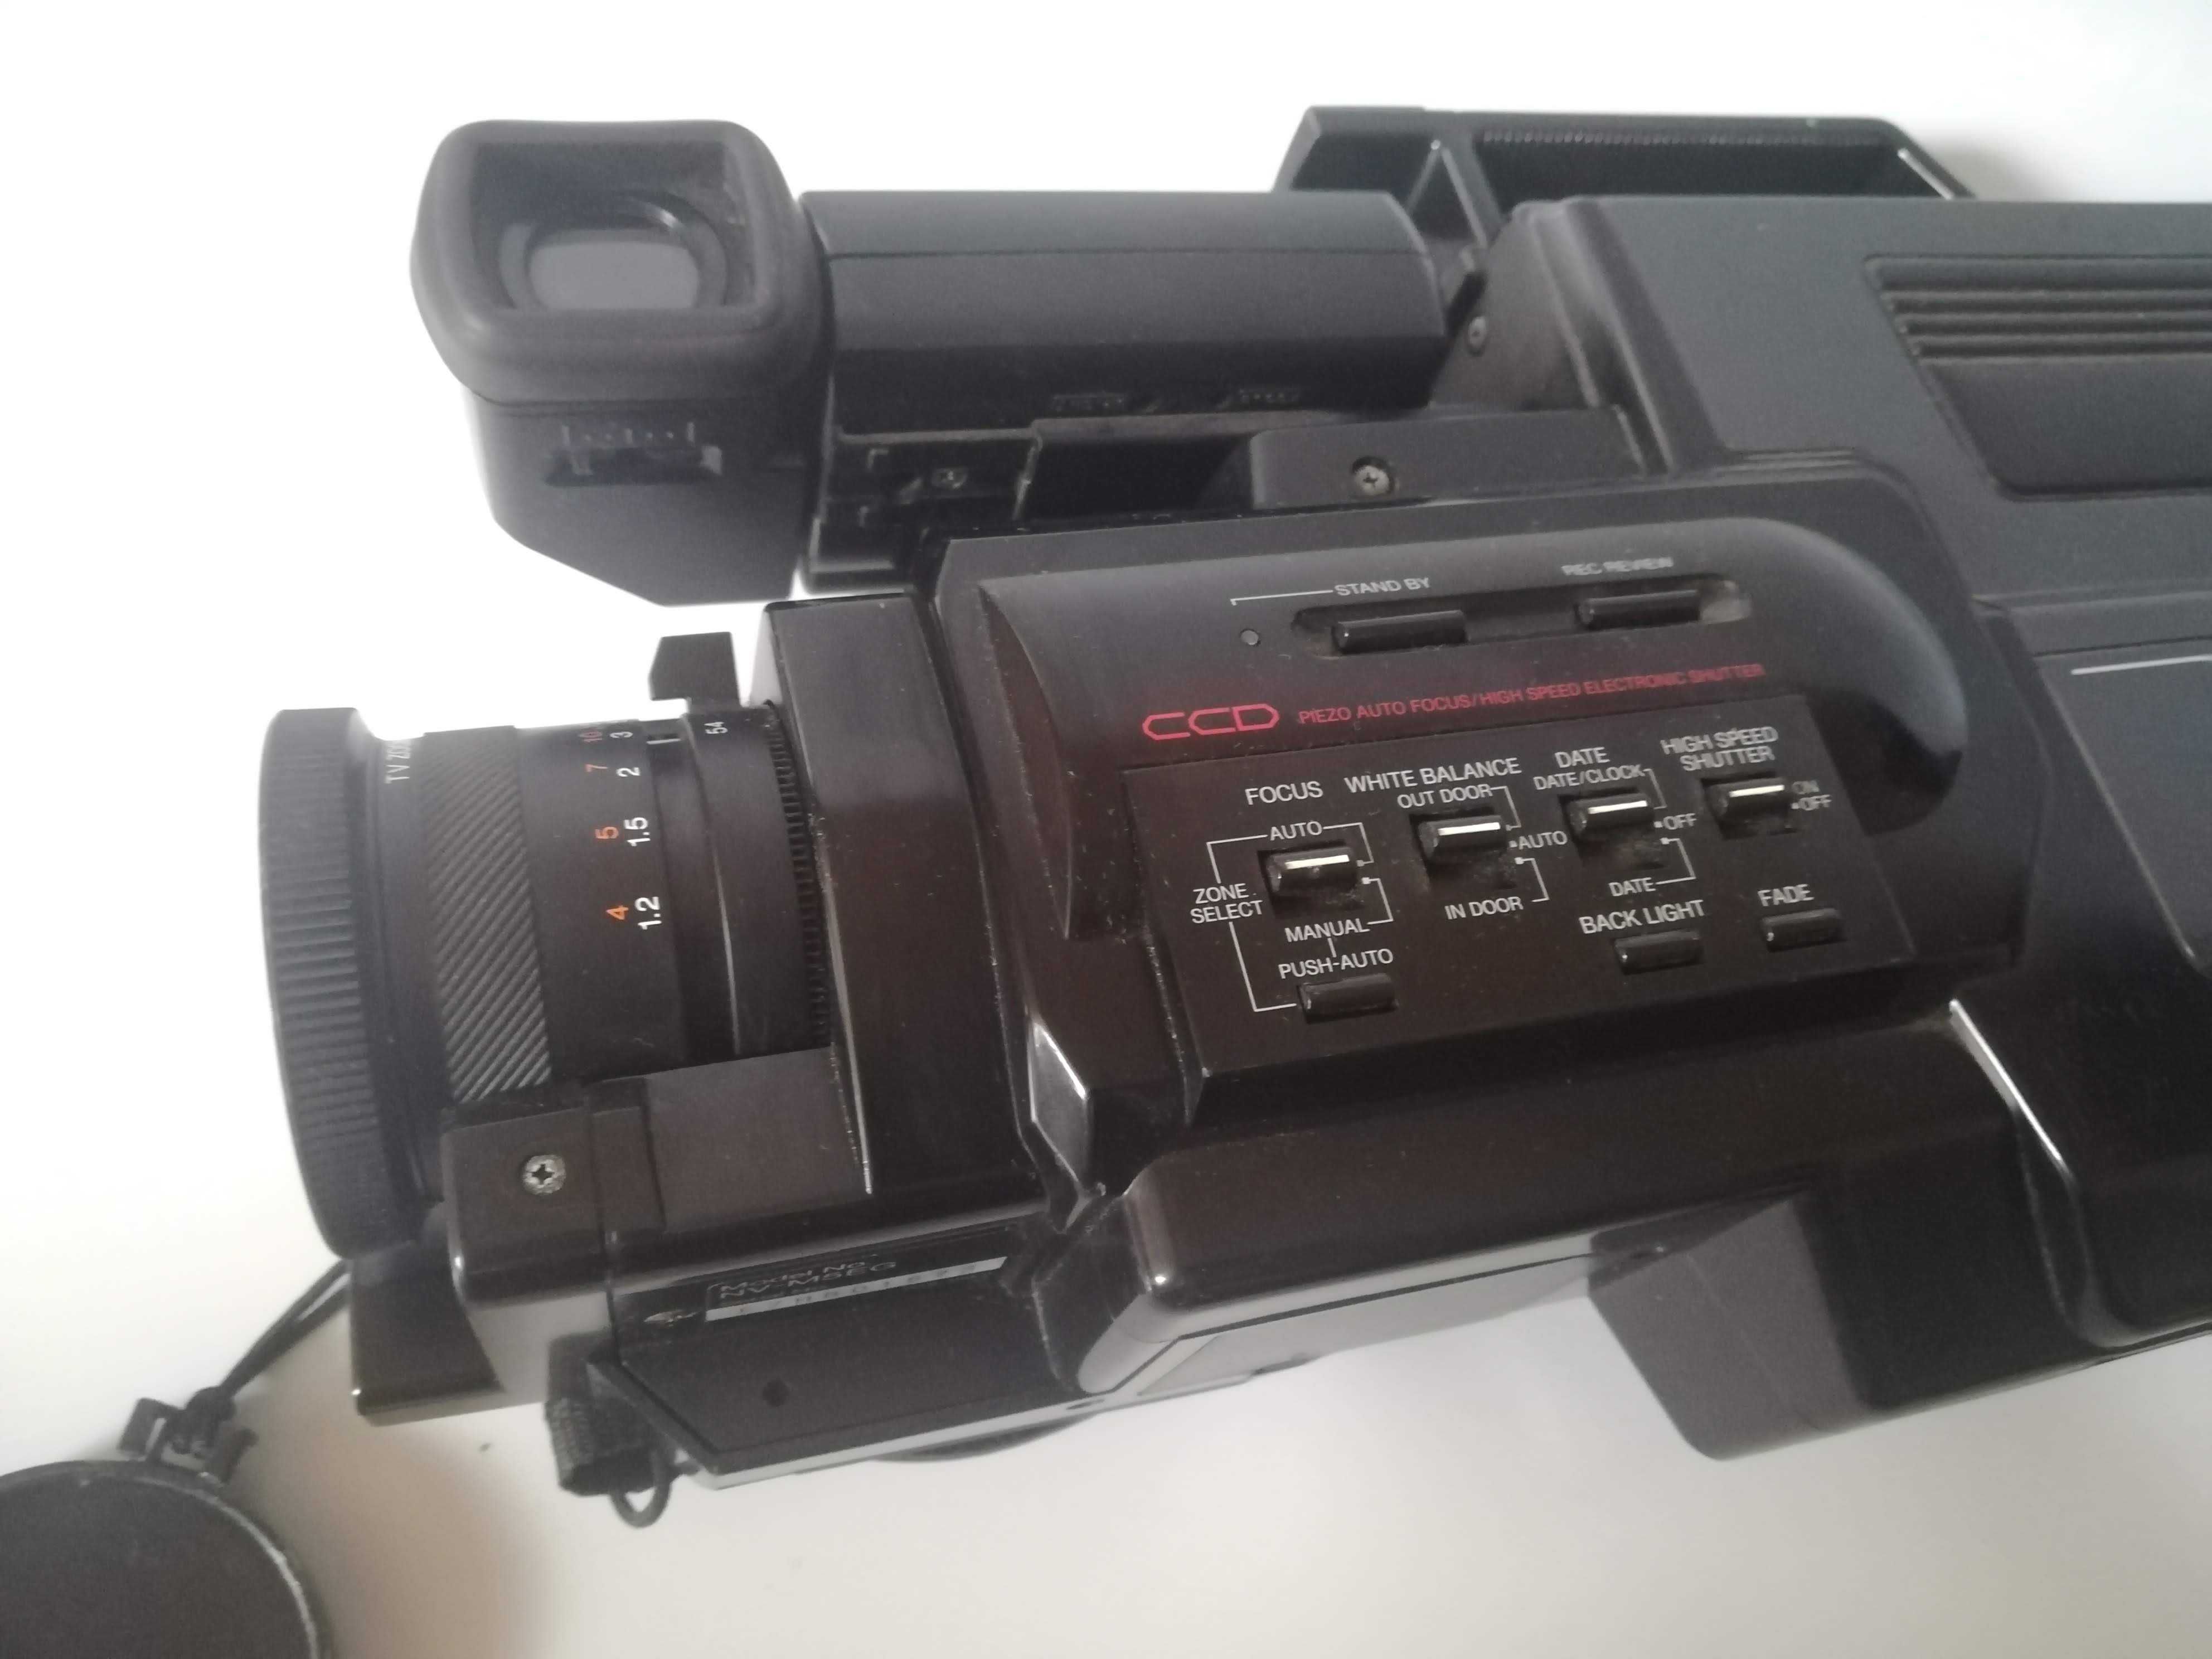 VHS National Panasonic M5 видео камера